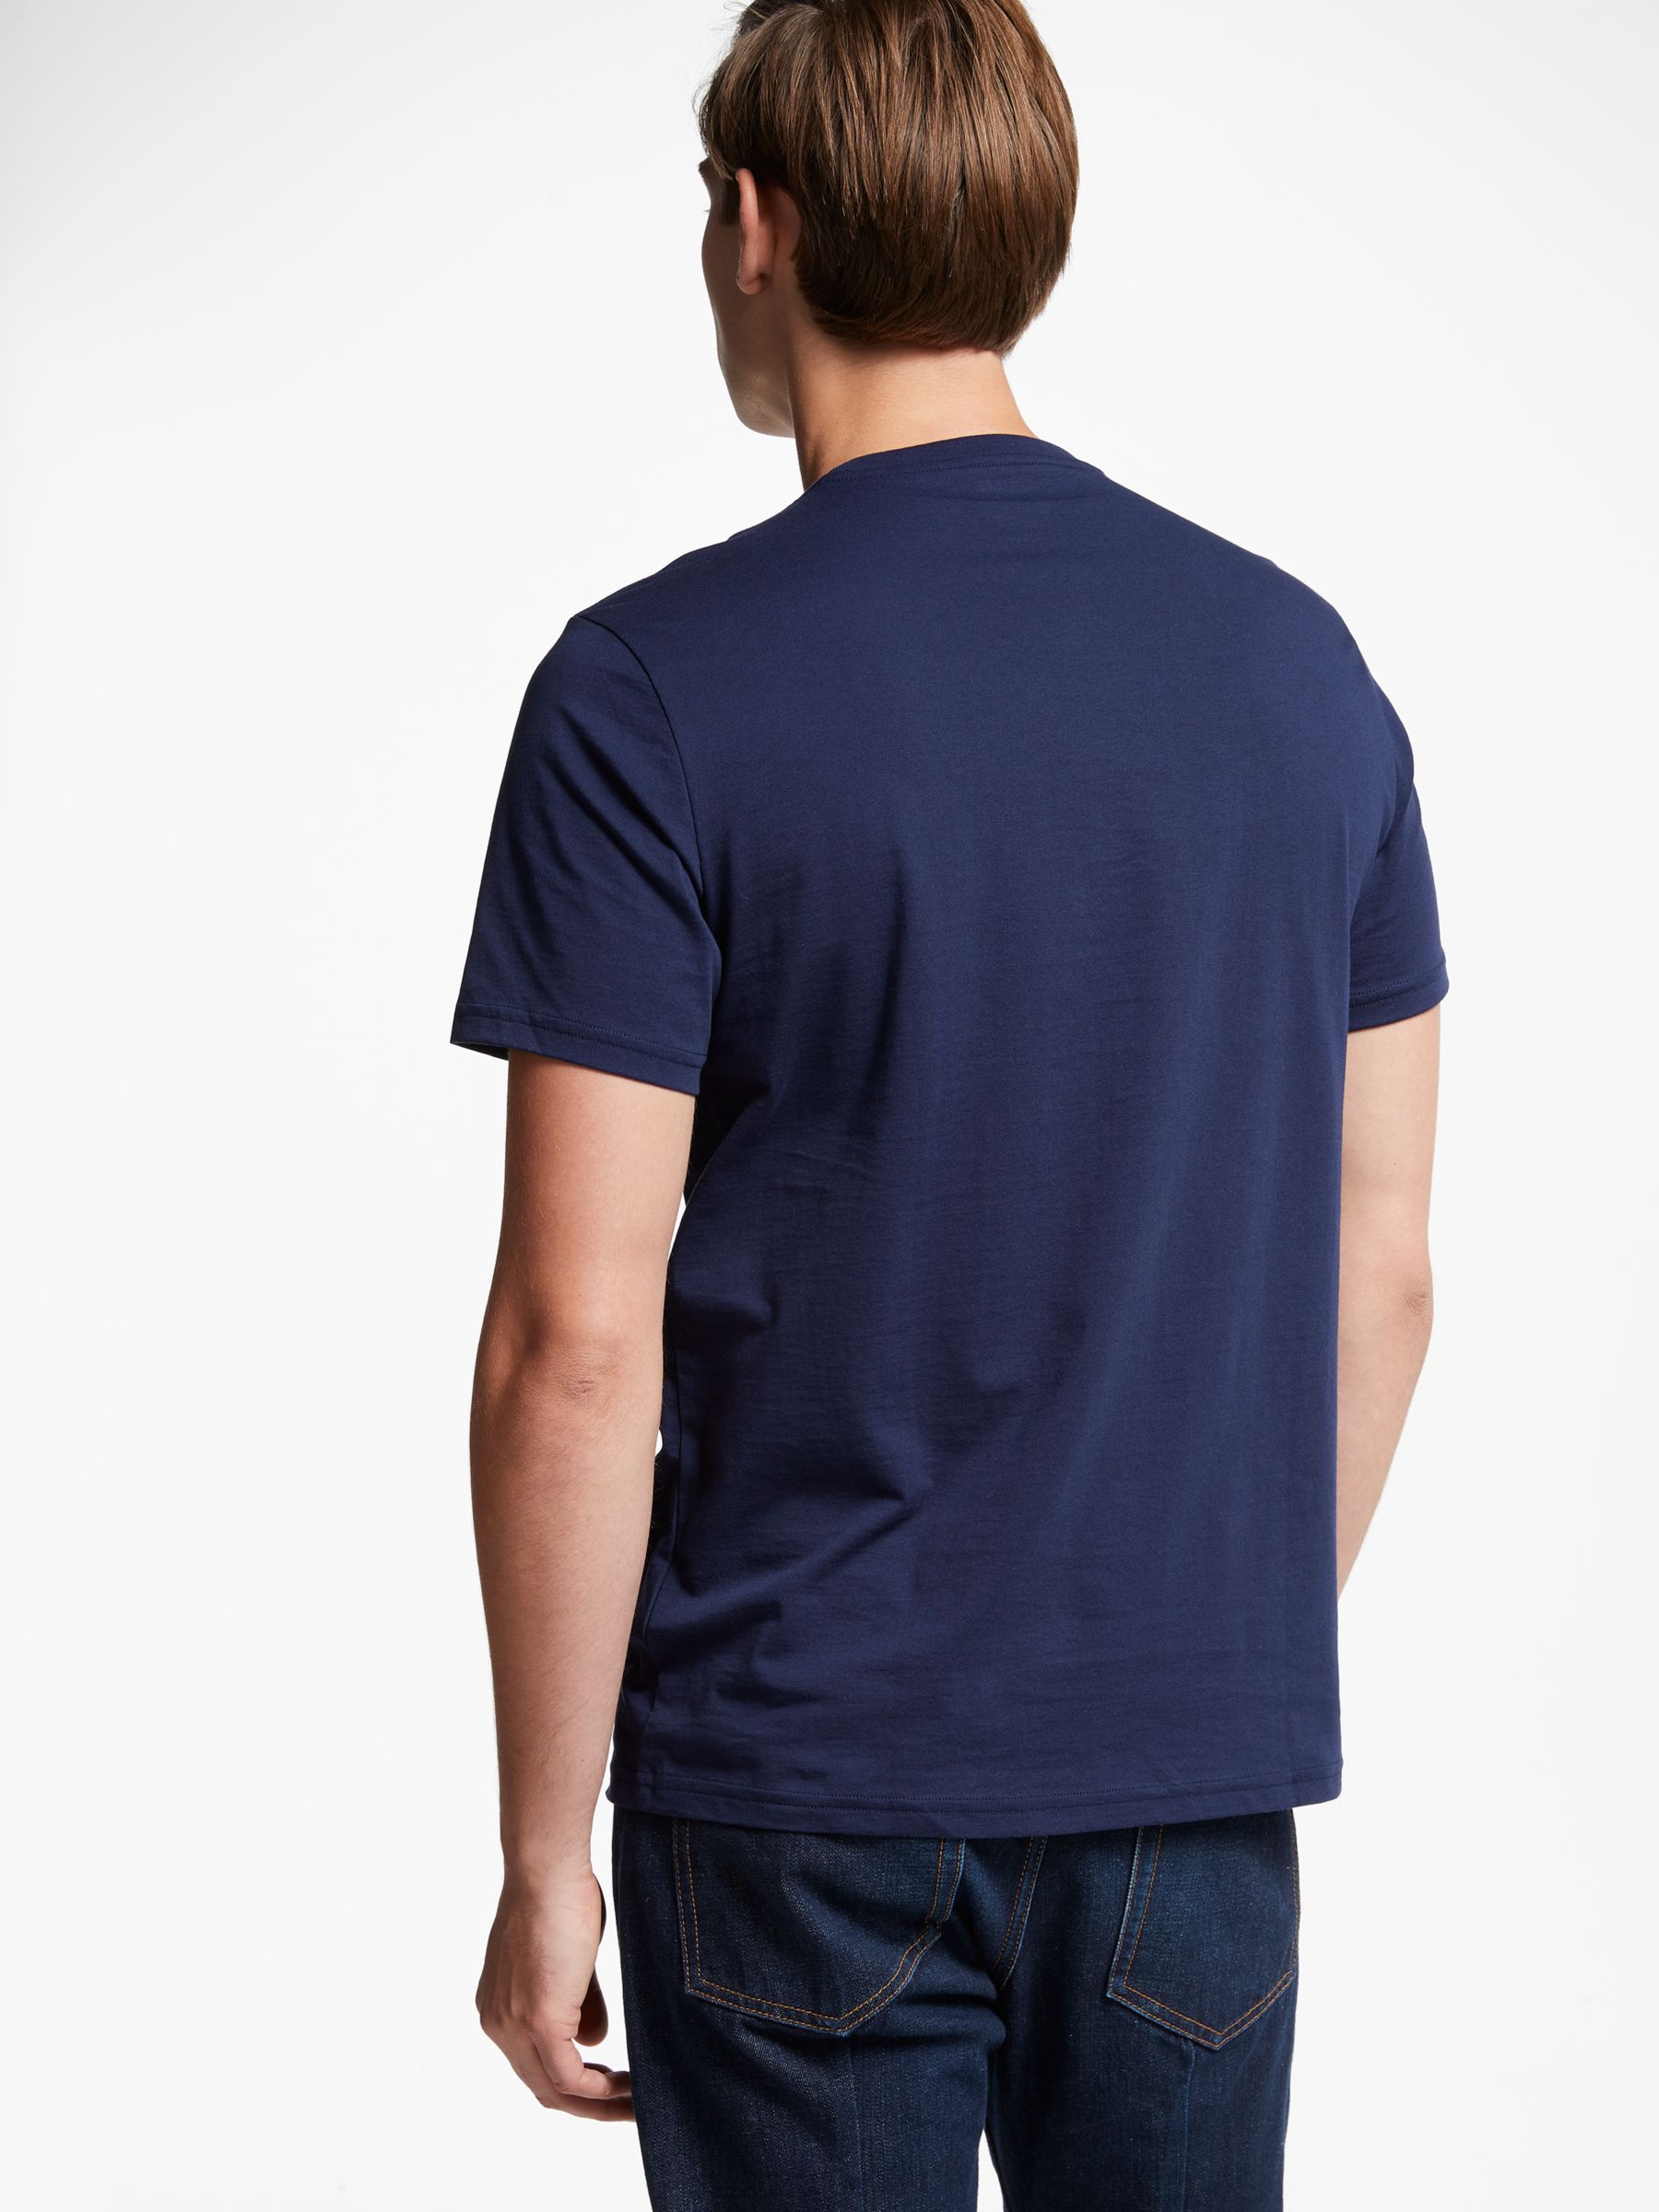 Polo Ralph Lauren Liquid Cotton T-Shirt, Navy at John Lewis & Partners